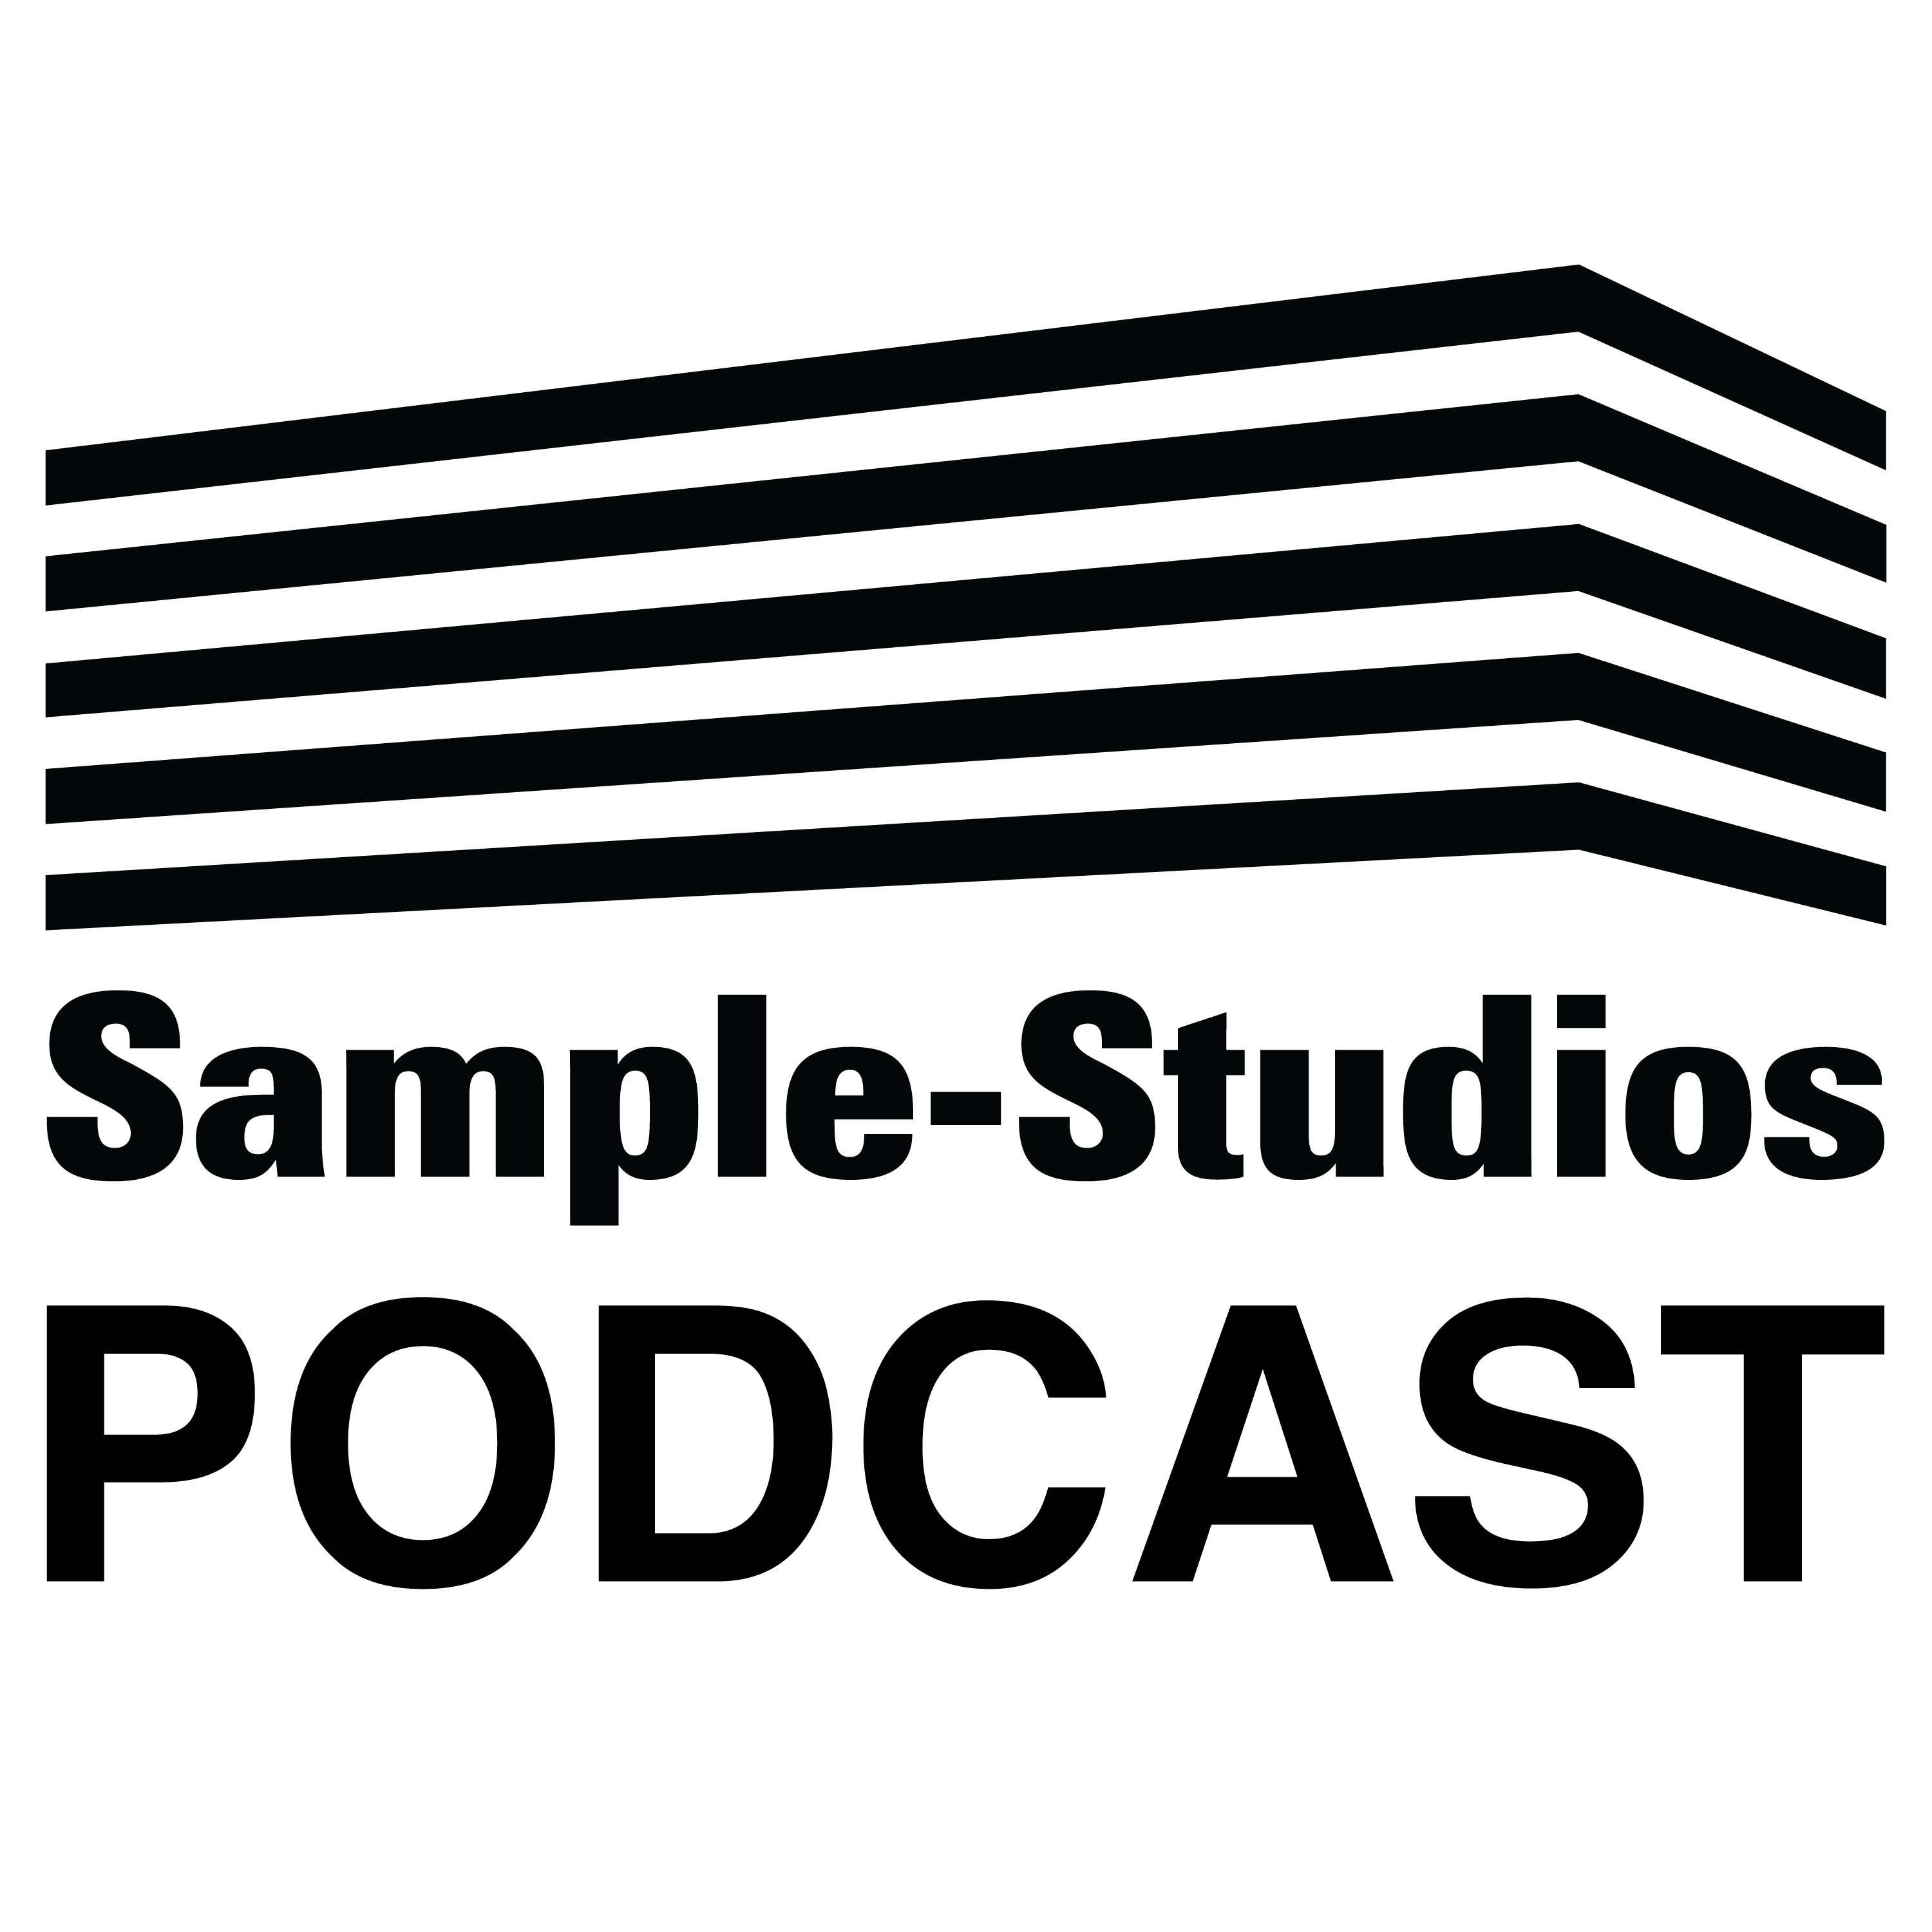 Sample-Studios Podcast